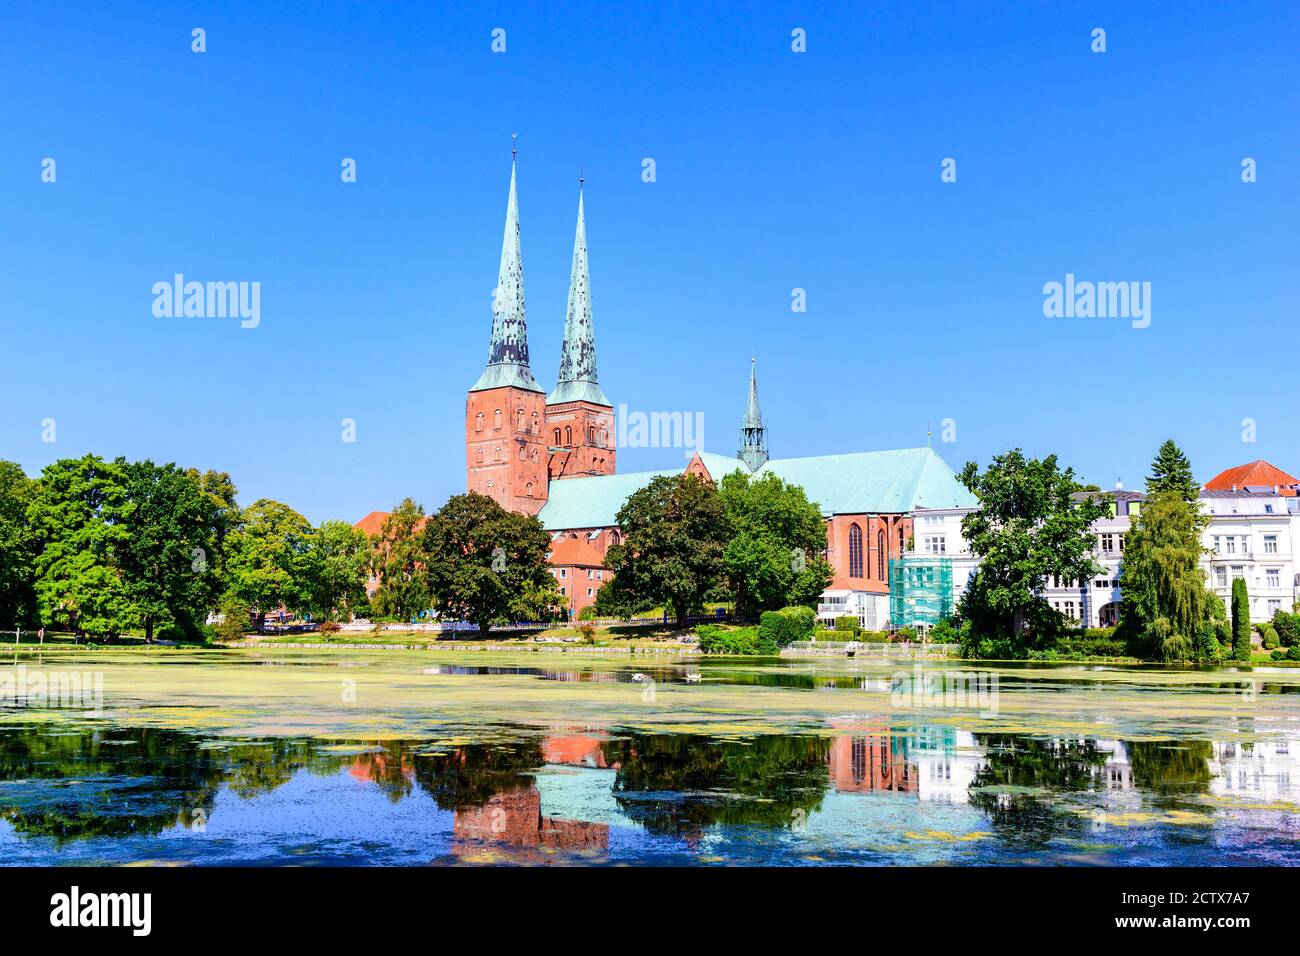 Chiesa catherale (Dom) con un lago, cielo blu a Lubeck (Lübeck), Schleswig-Holstein, Germania Foto Stock